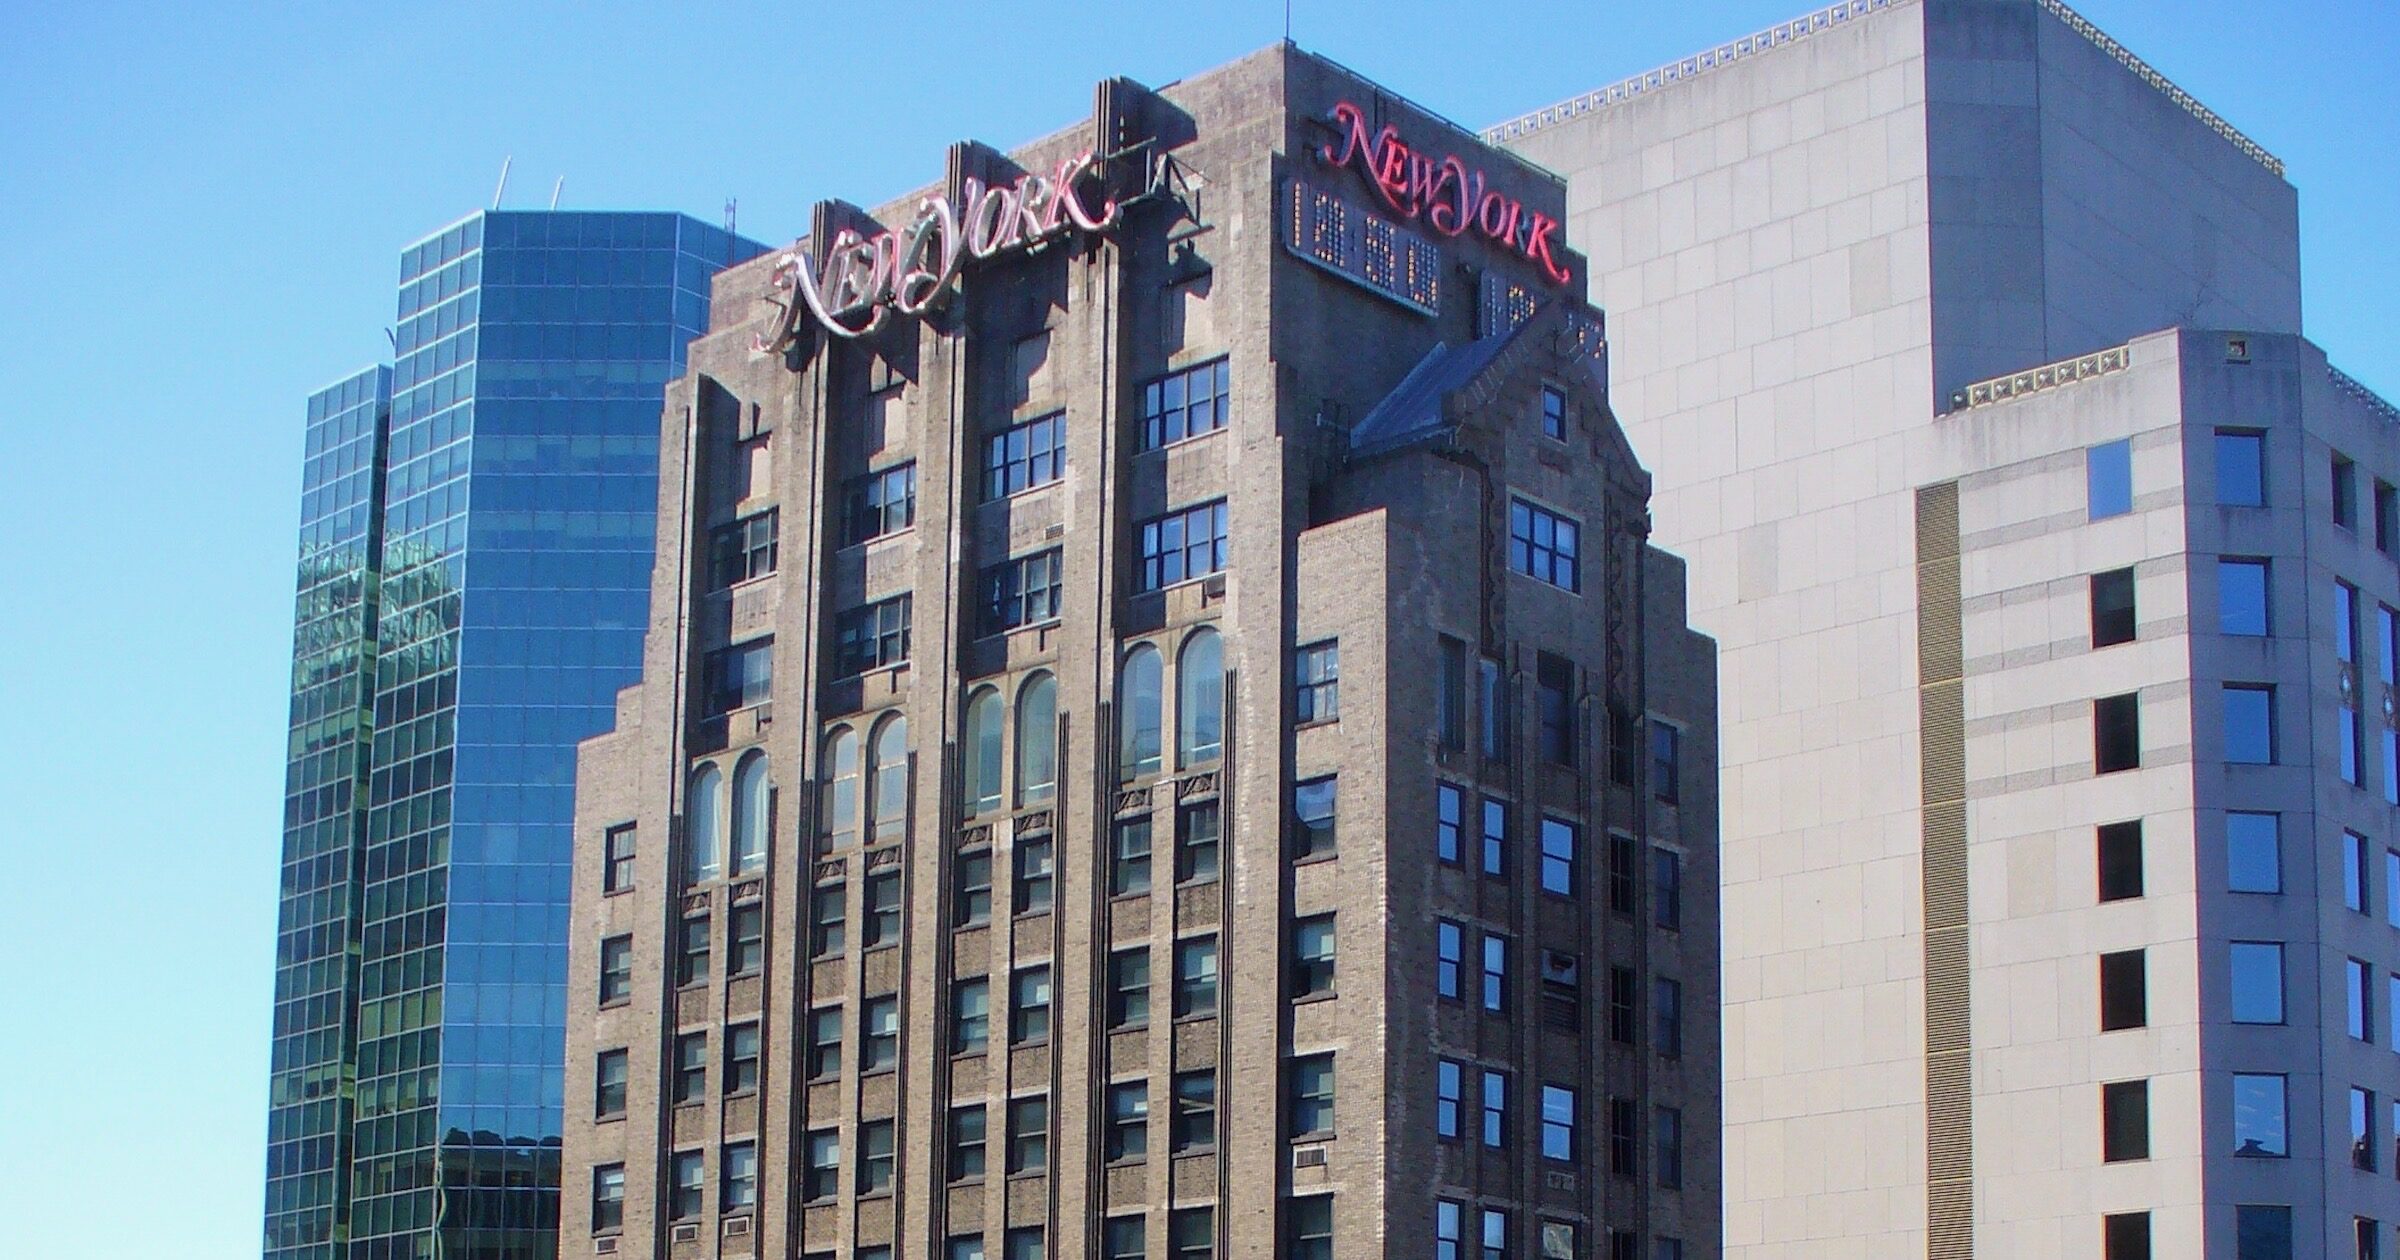 New York Magazine headquarters building